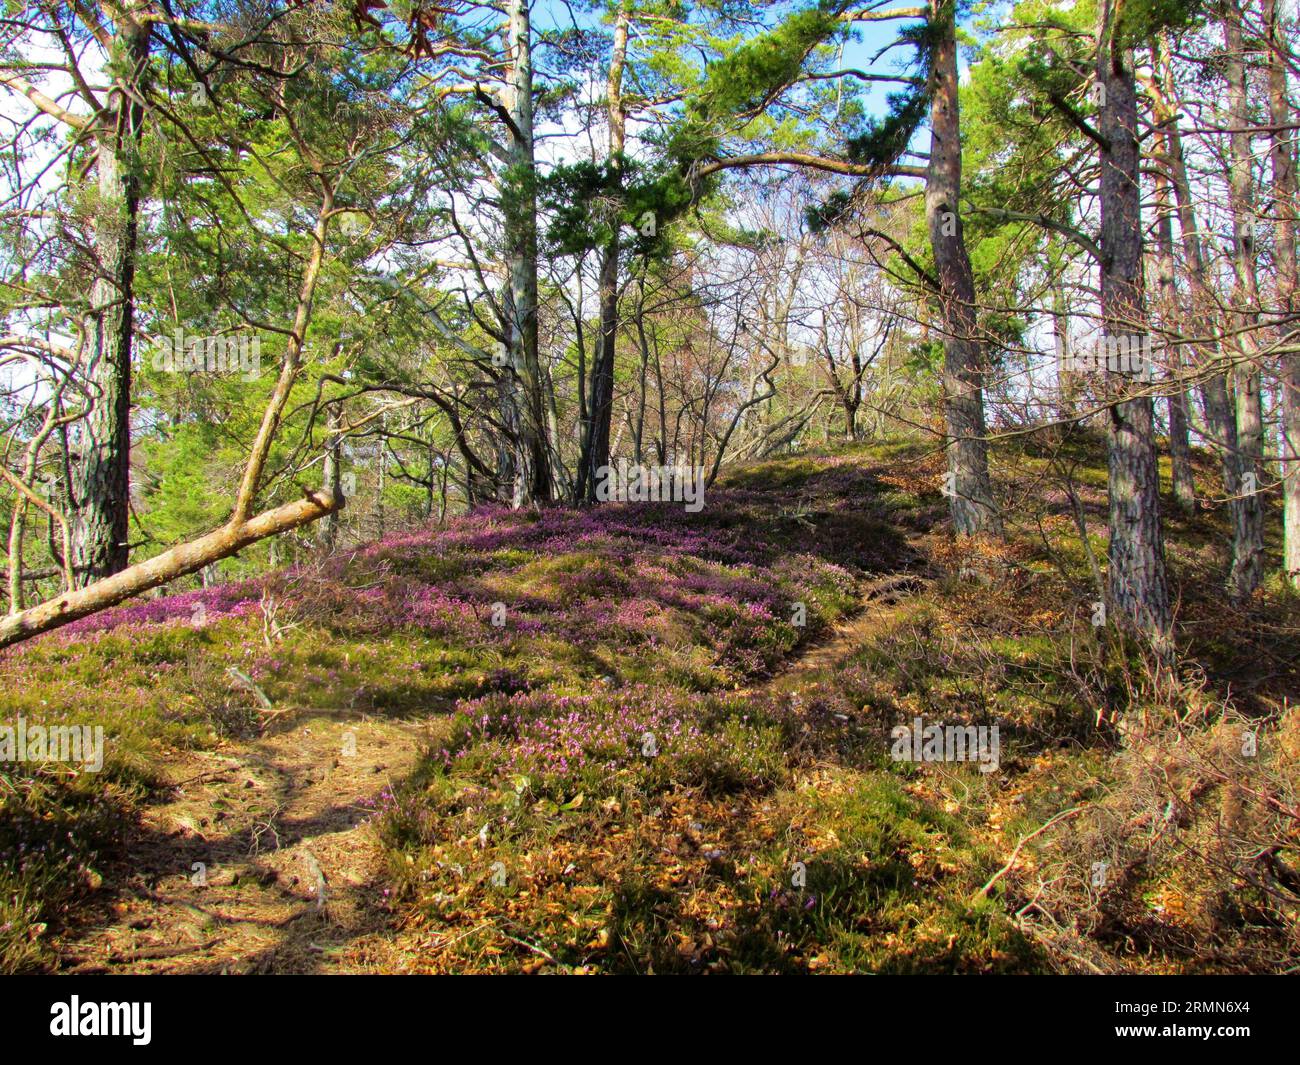 Scots pine in Slovenia with pink flowering winter heath, spring heath or alpine heath (Erica carnea) covering the ground Stock Photo